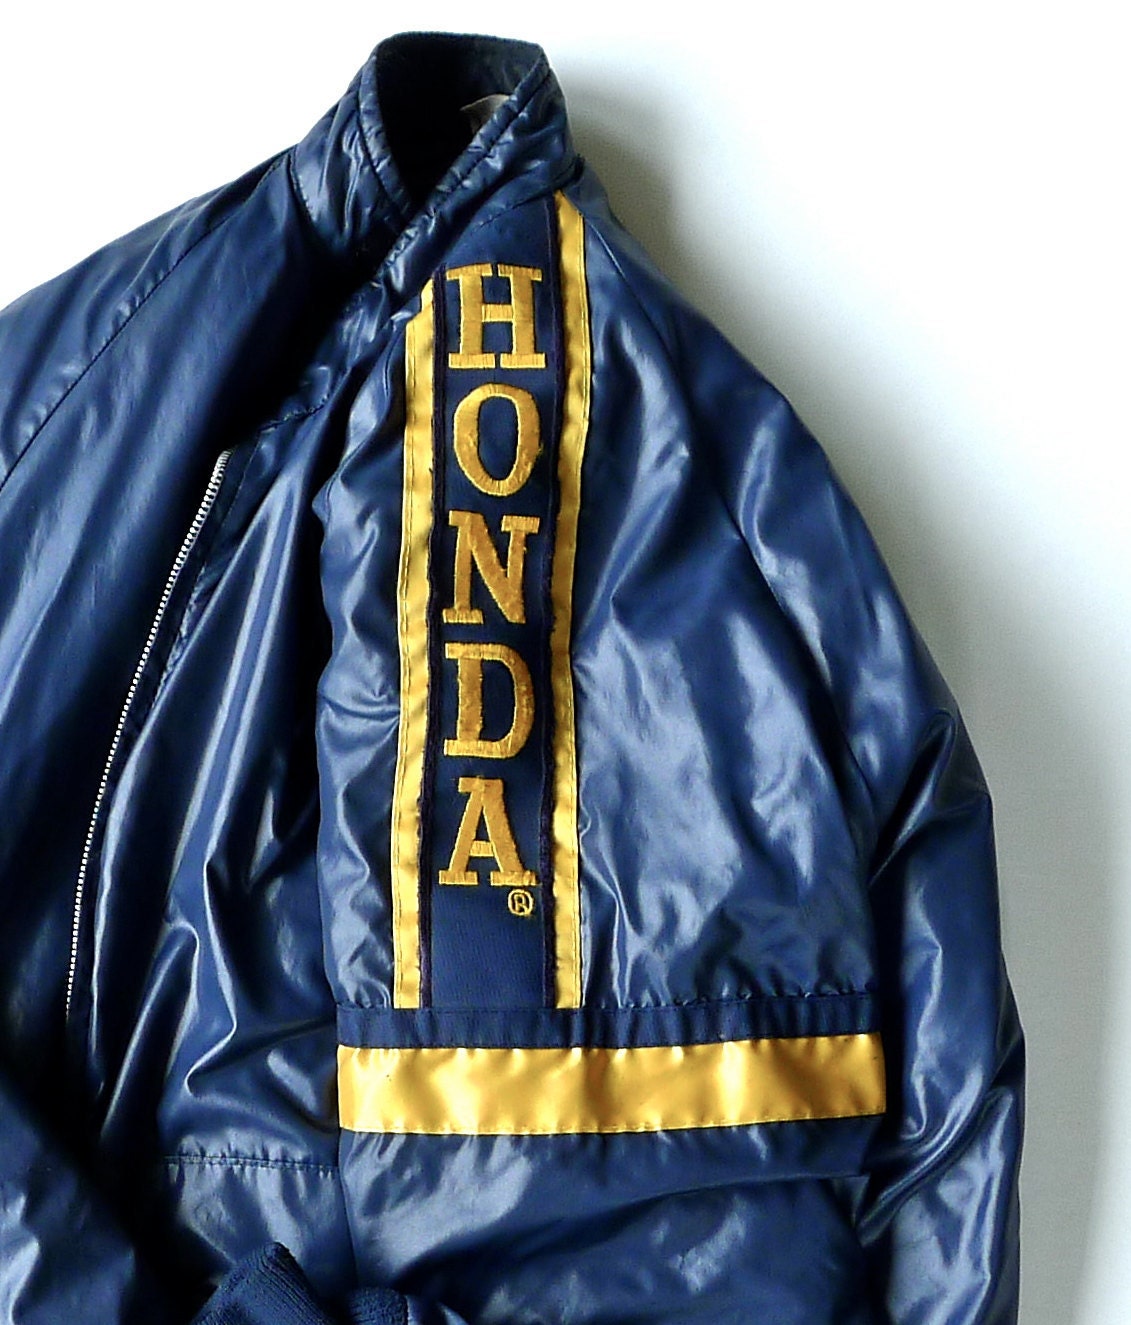 Vintage Honda Racing Jacket made by Hondaline size by marybethhale